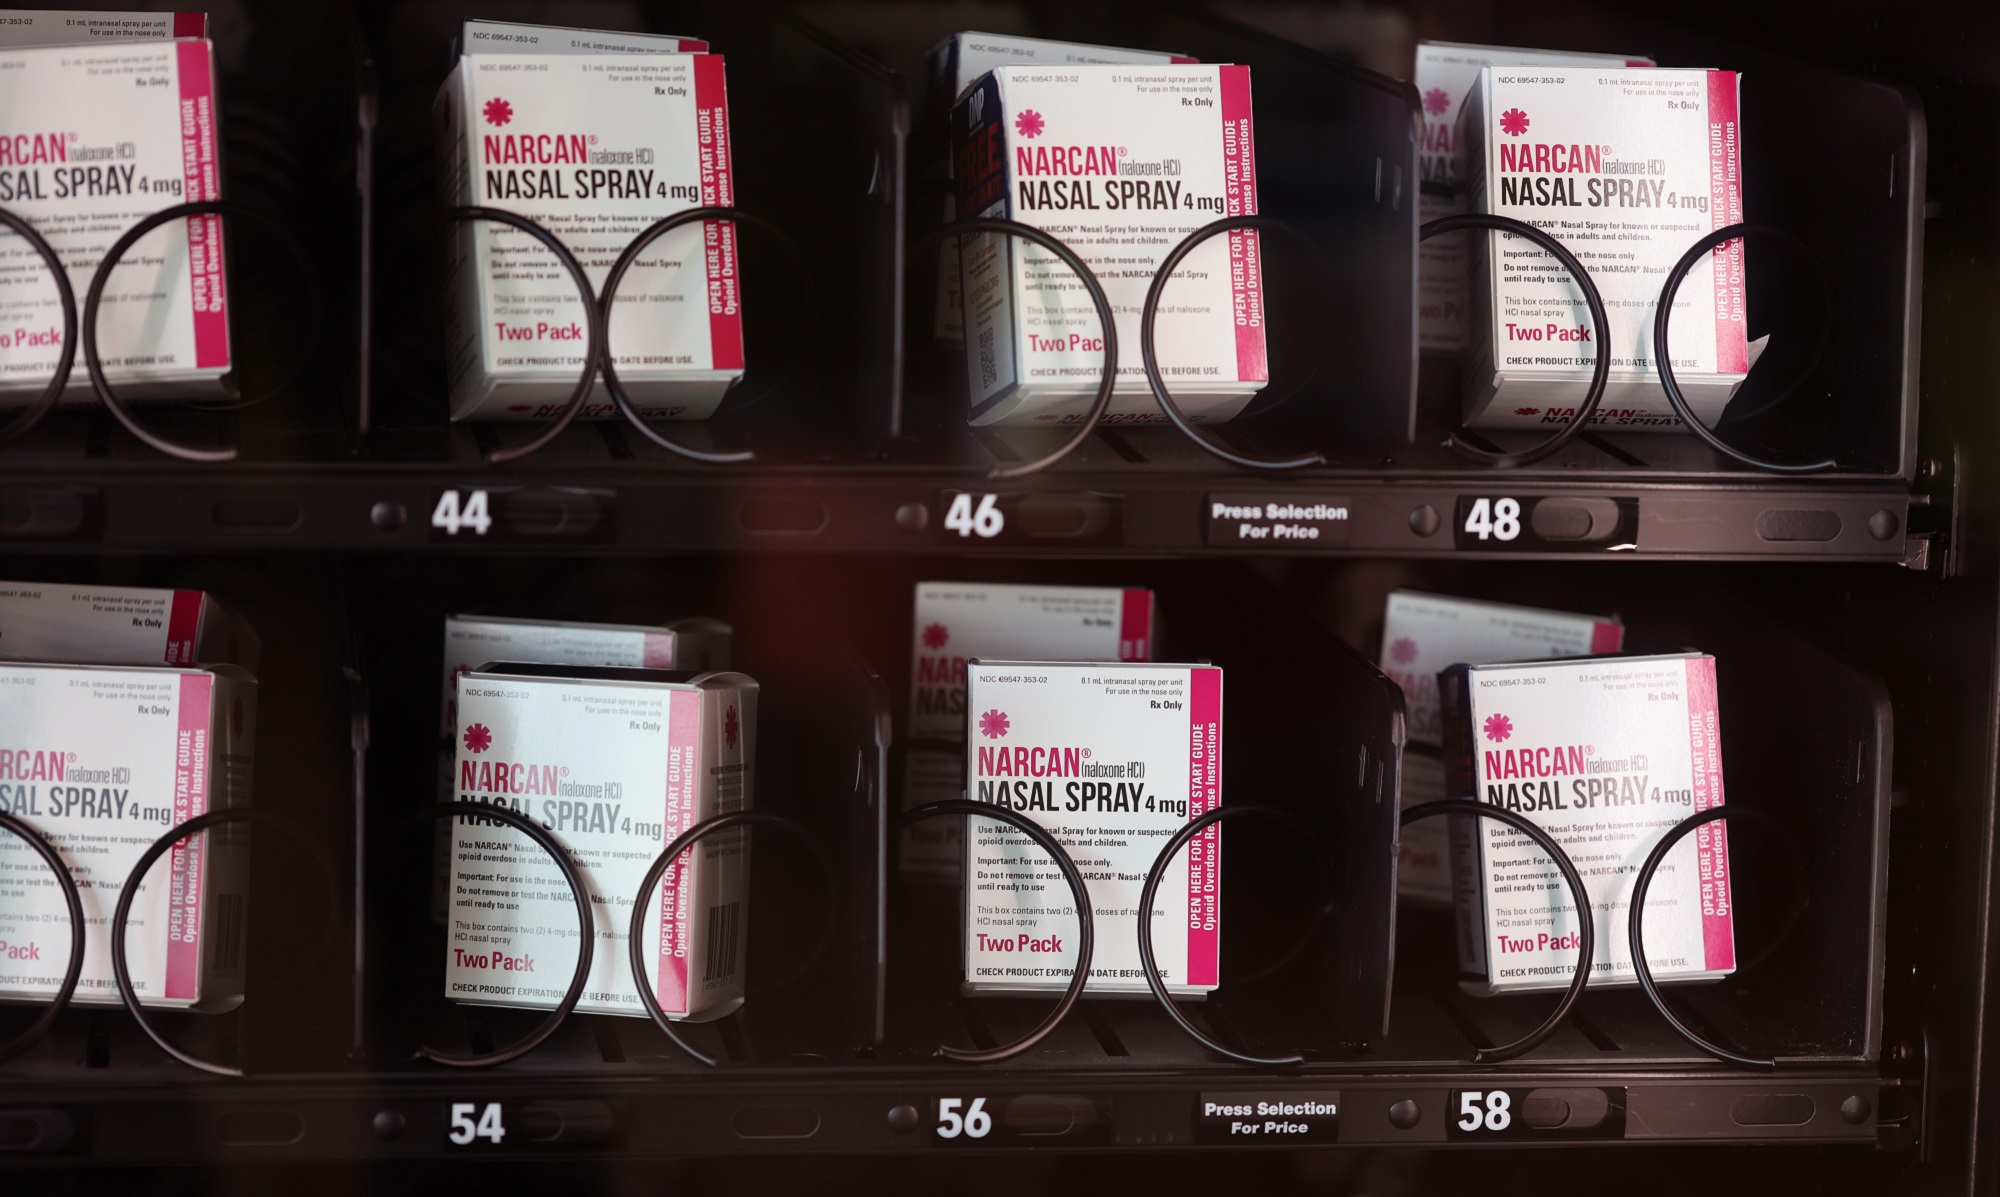 Narcan naloxone nasal spray vending machine in Illinois to fight opioid overdoses